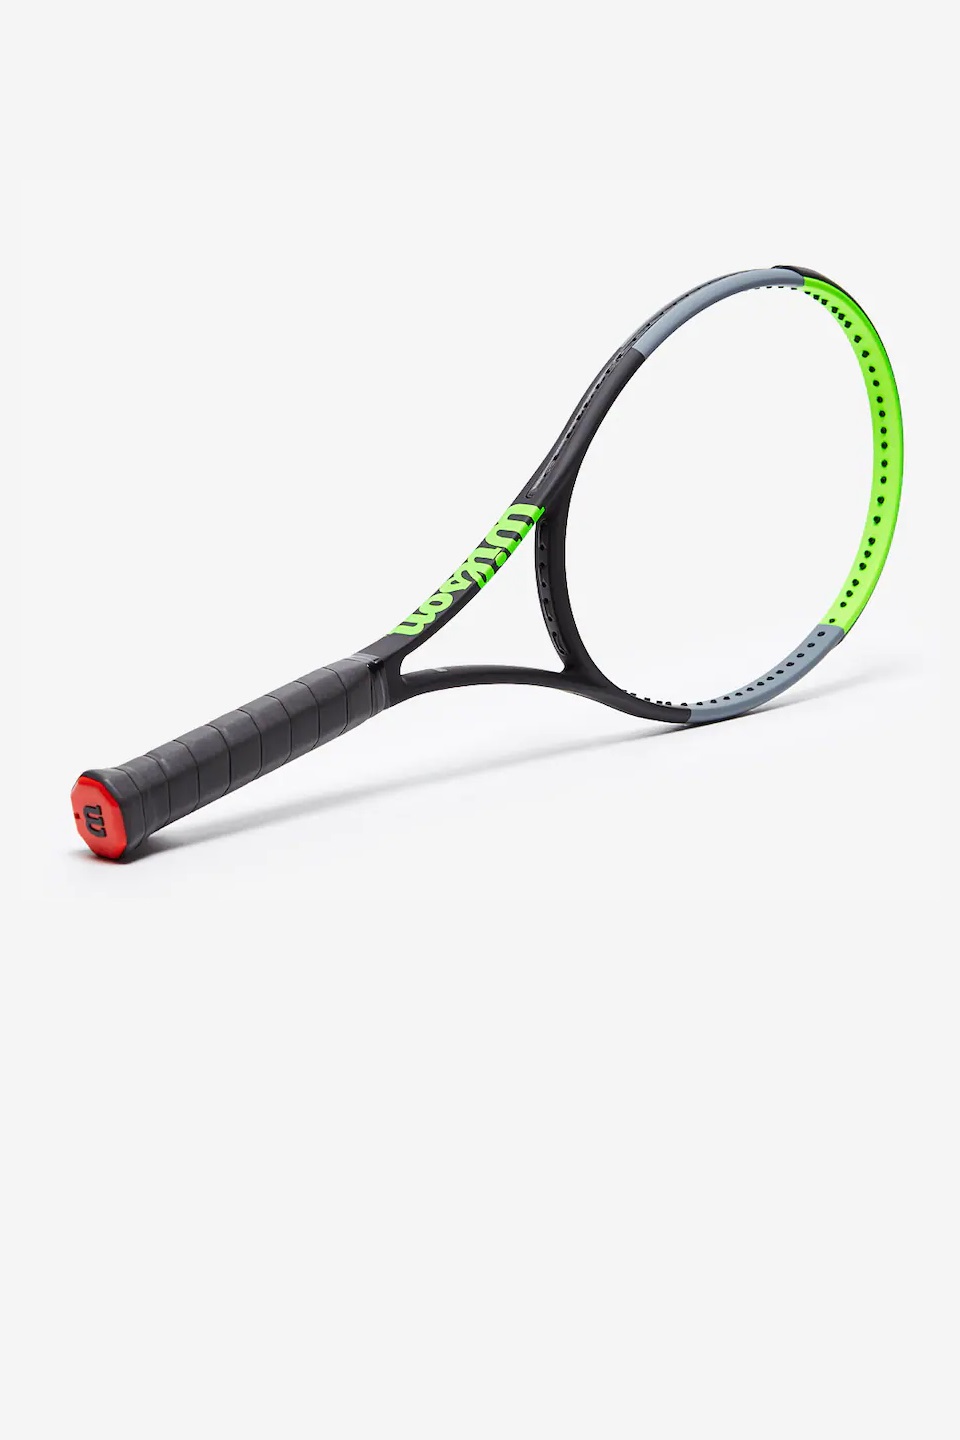  - Wilson Blade 100UL V7.0 Tenis Raketi